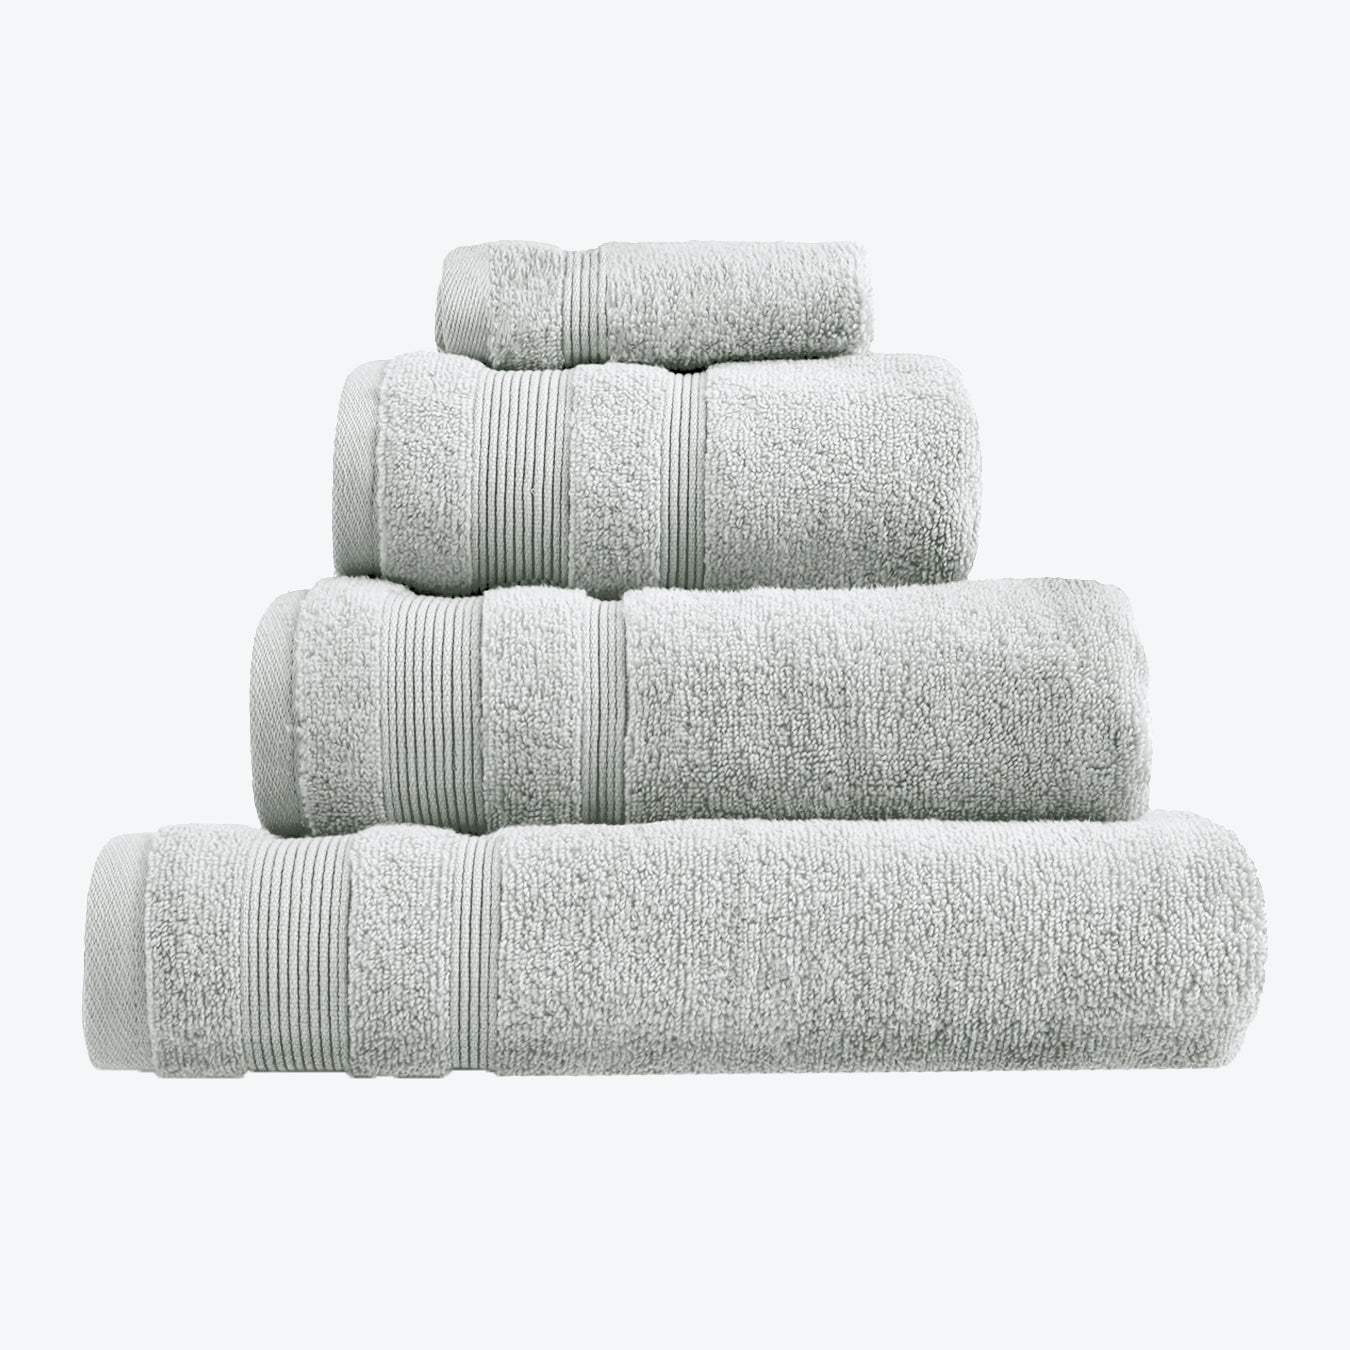 Dove Grey Egyptian Cotton Towel Bale Set - Premium Zero Twist Bathroom Towels (Hand Towel, Bath Towel, Bath Sheet, face Cloths).